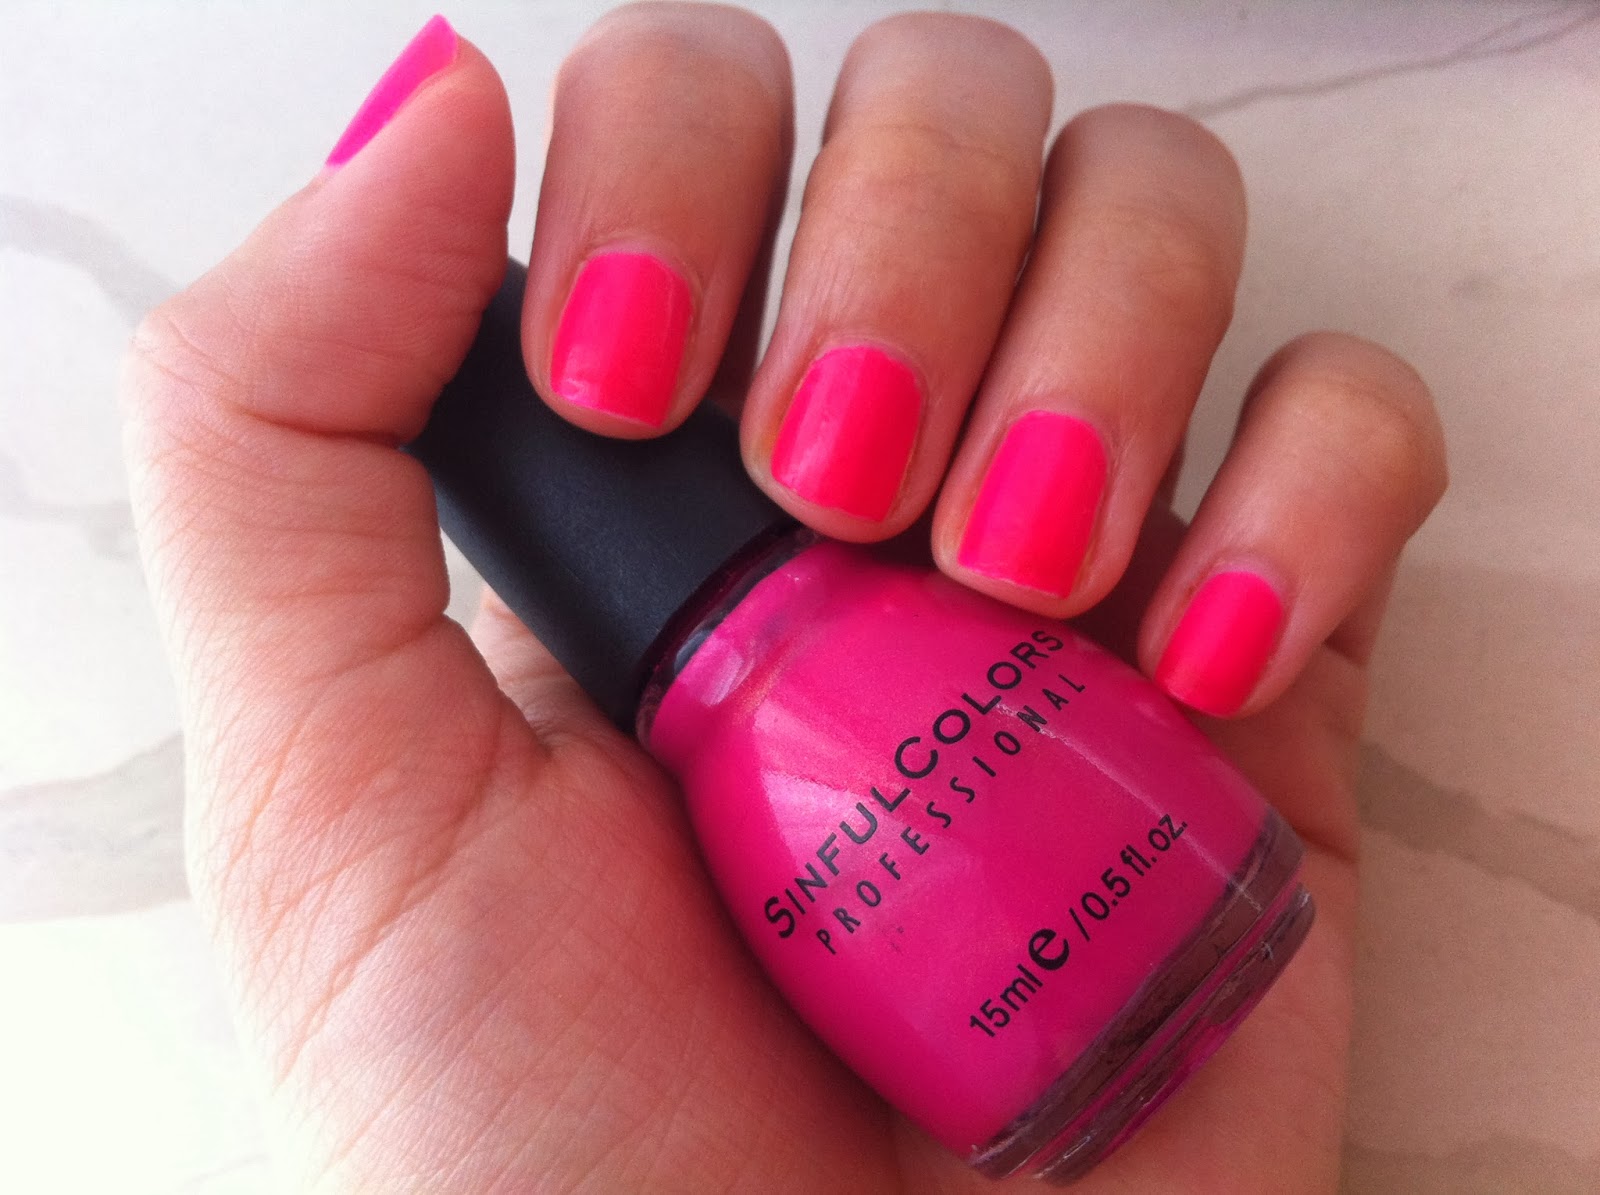 1. Sinful Colors Professional Nail Polish - Pinky Glitter - wide 2